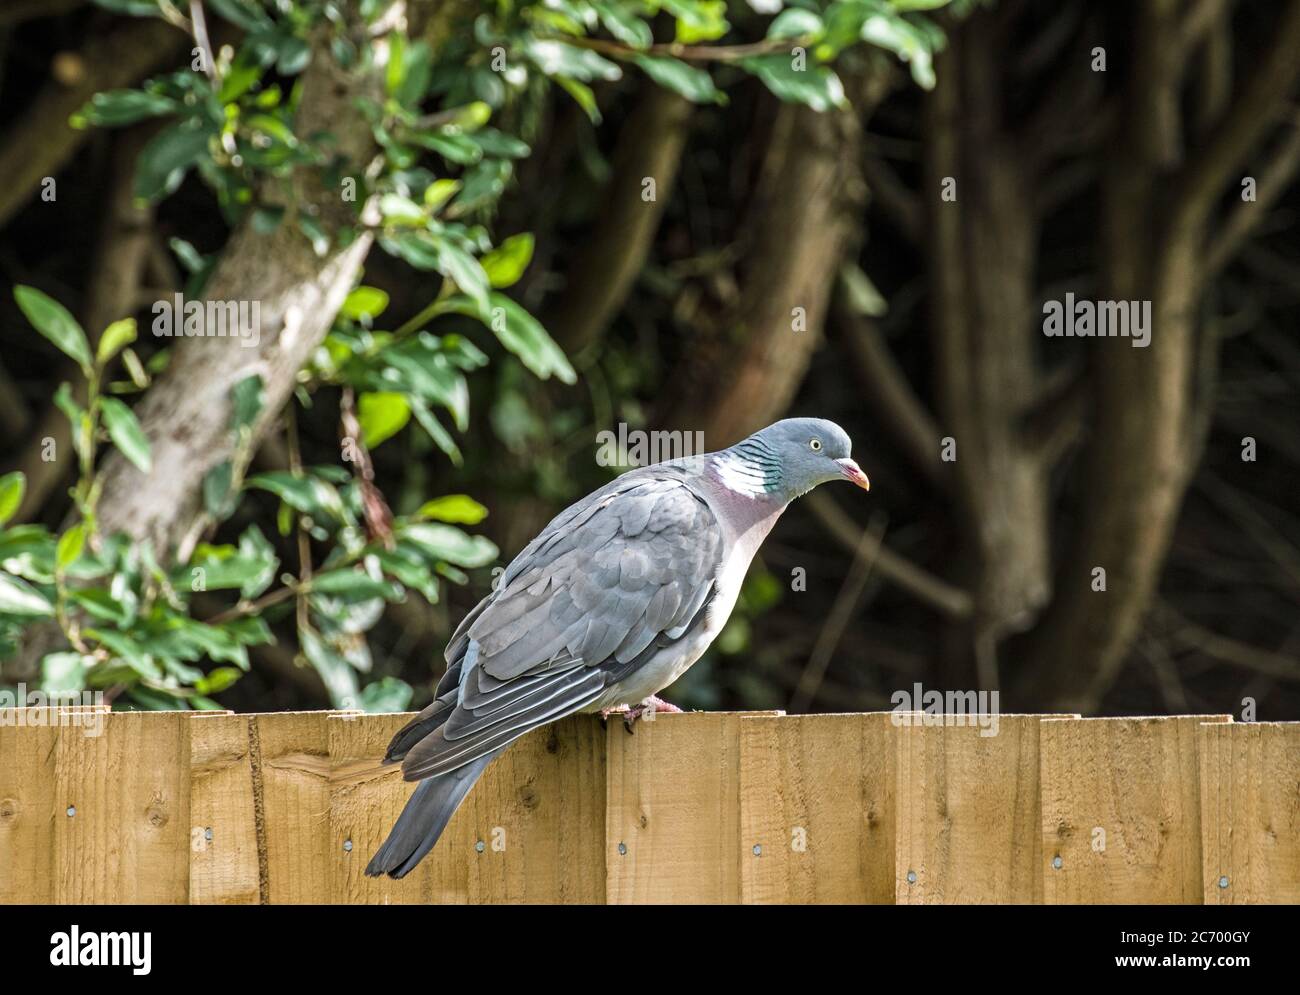 Wood pigeon seeking out birdseed in a garden. Stock Photo